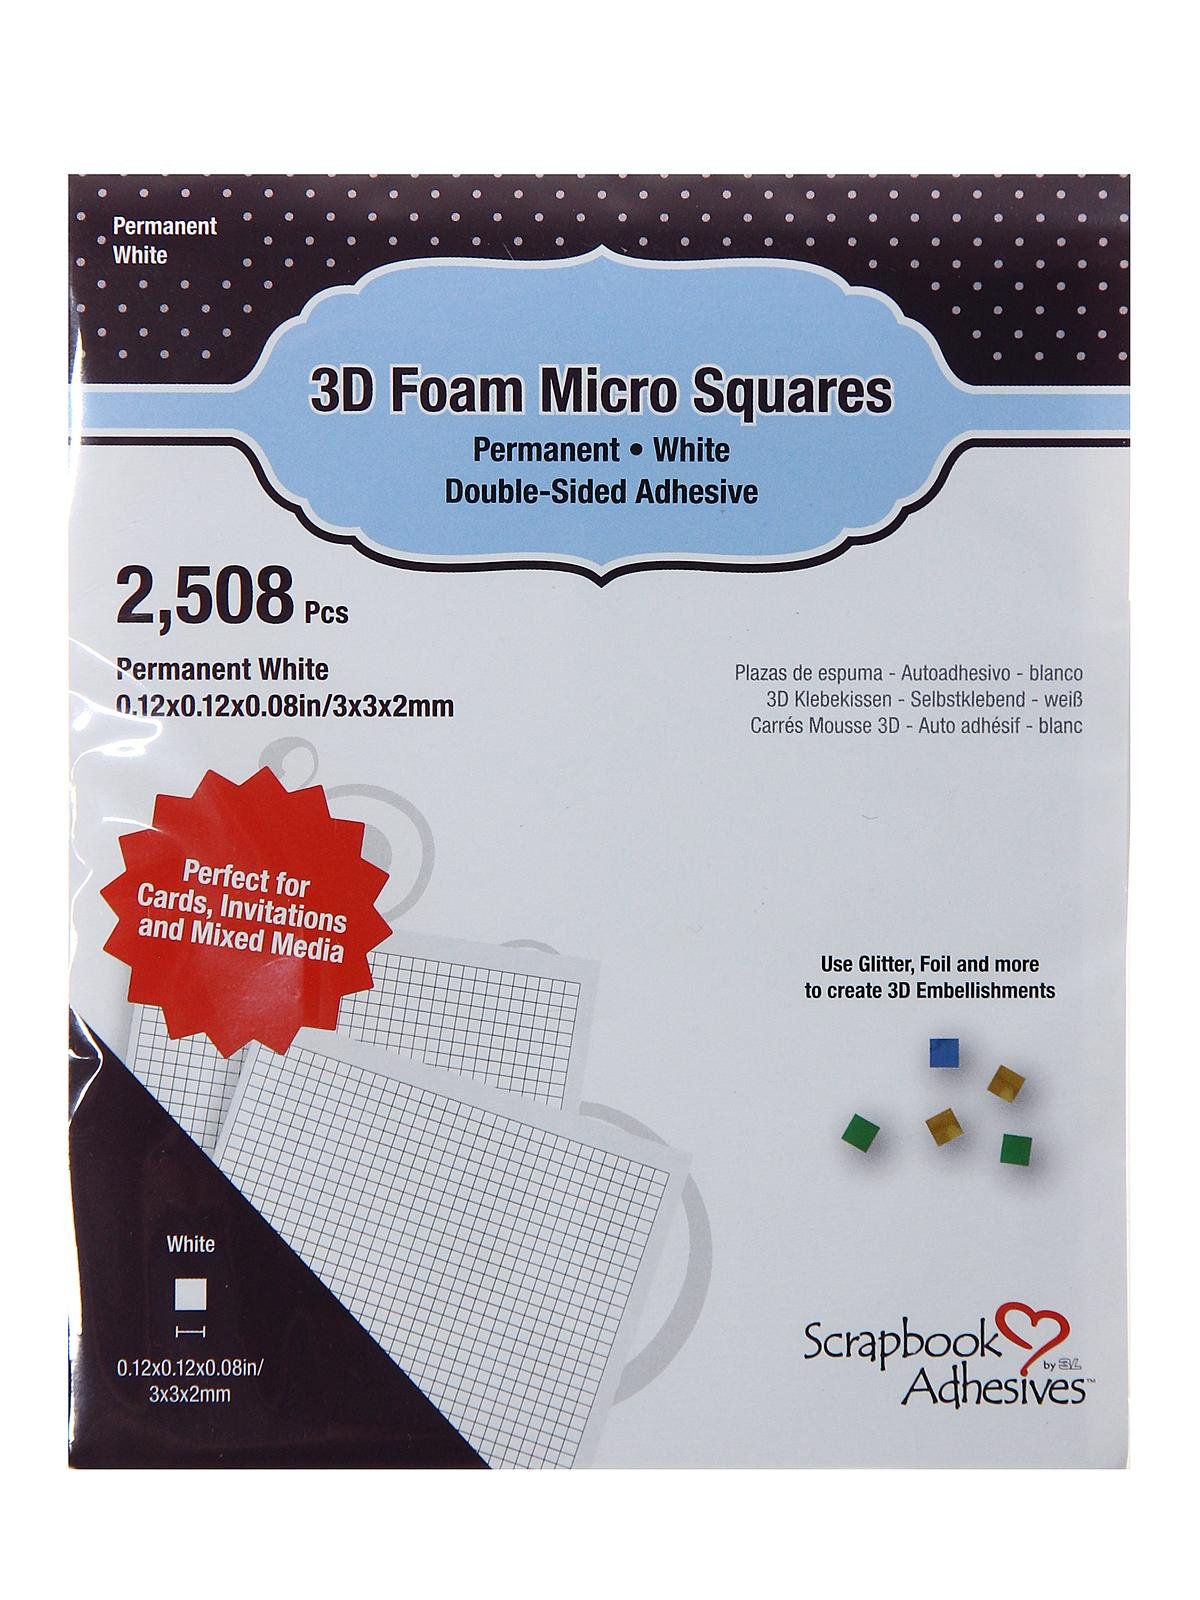 Scrapbook Adhesives 3D Self Adhesive Foam Squares - White - 0.25 x 0.25